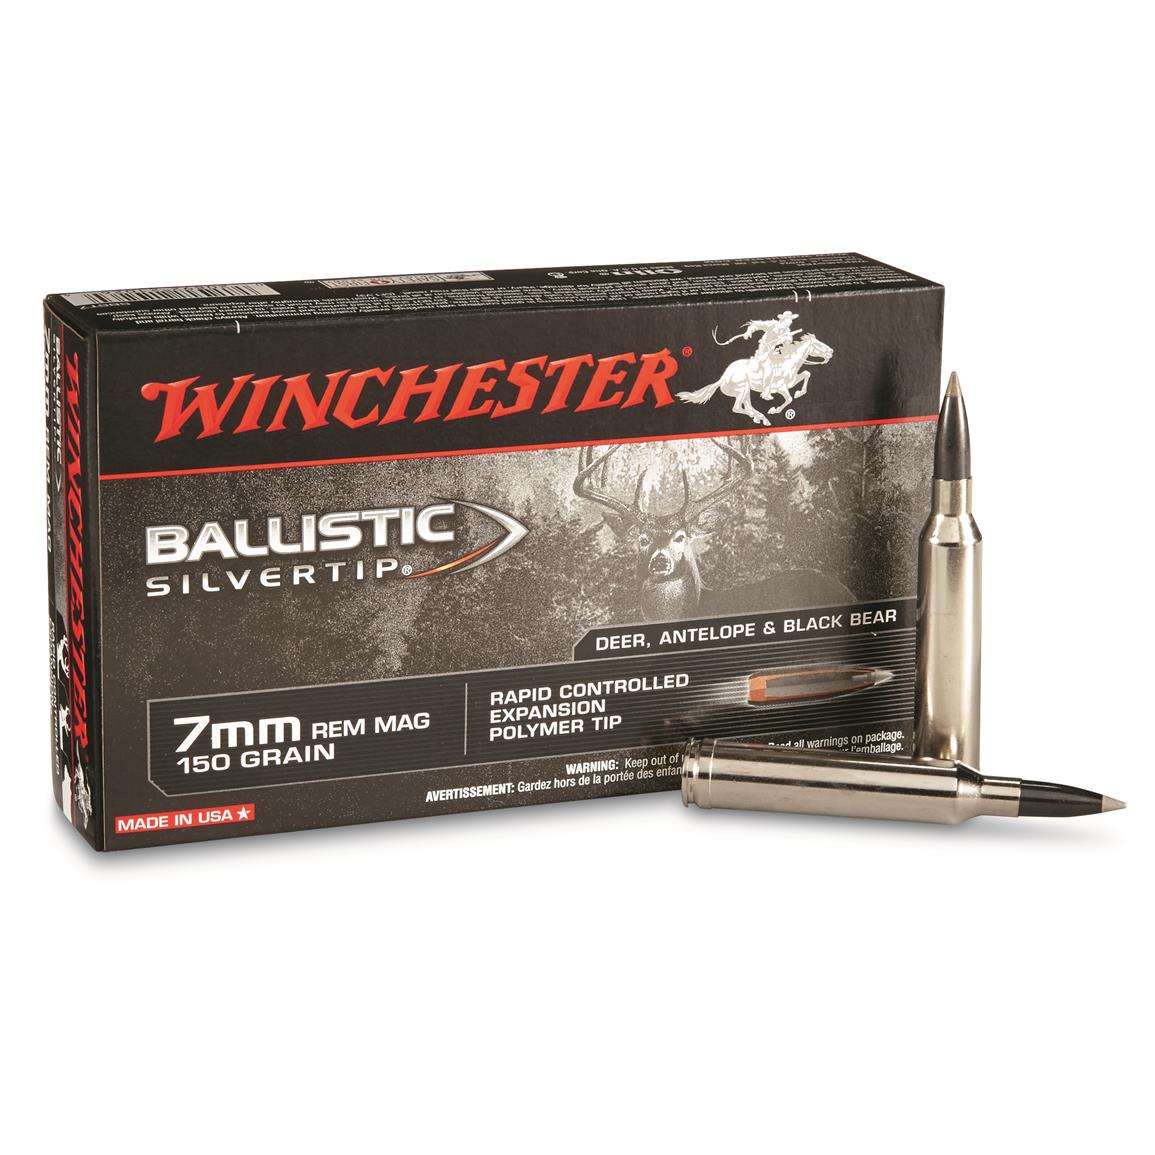 Ballistic Silvertip® Supreme Rifle Bullets